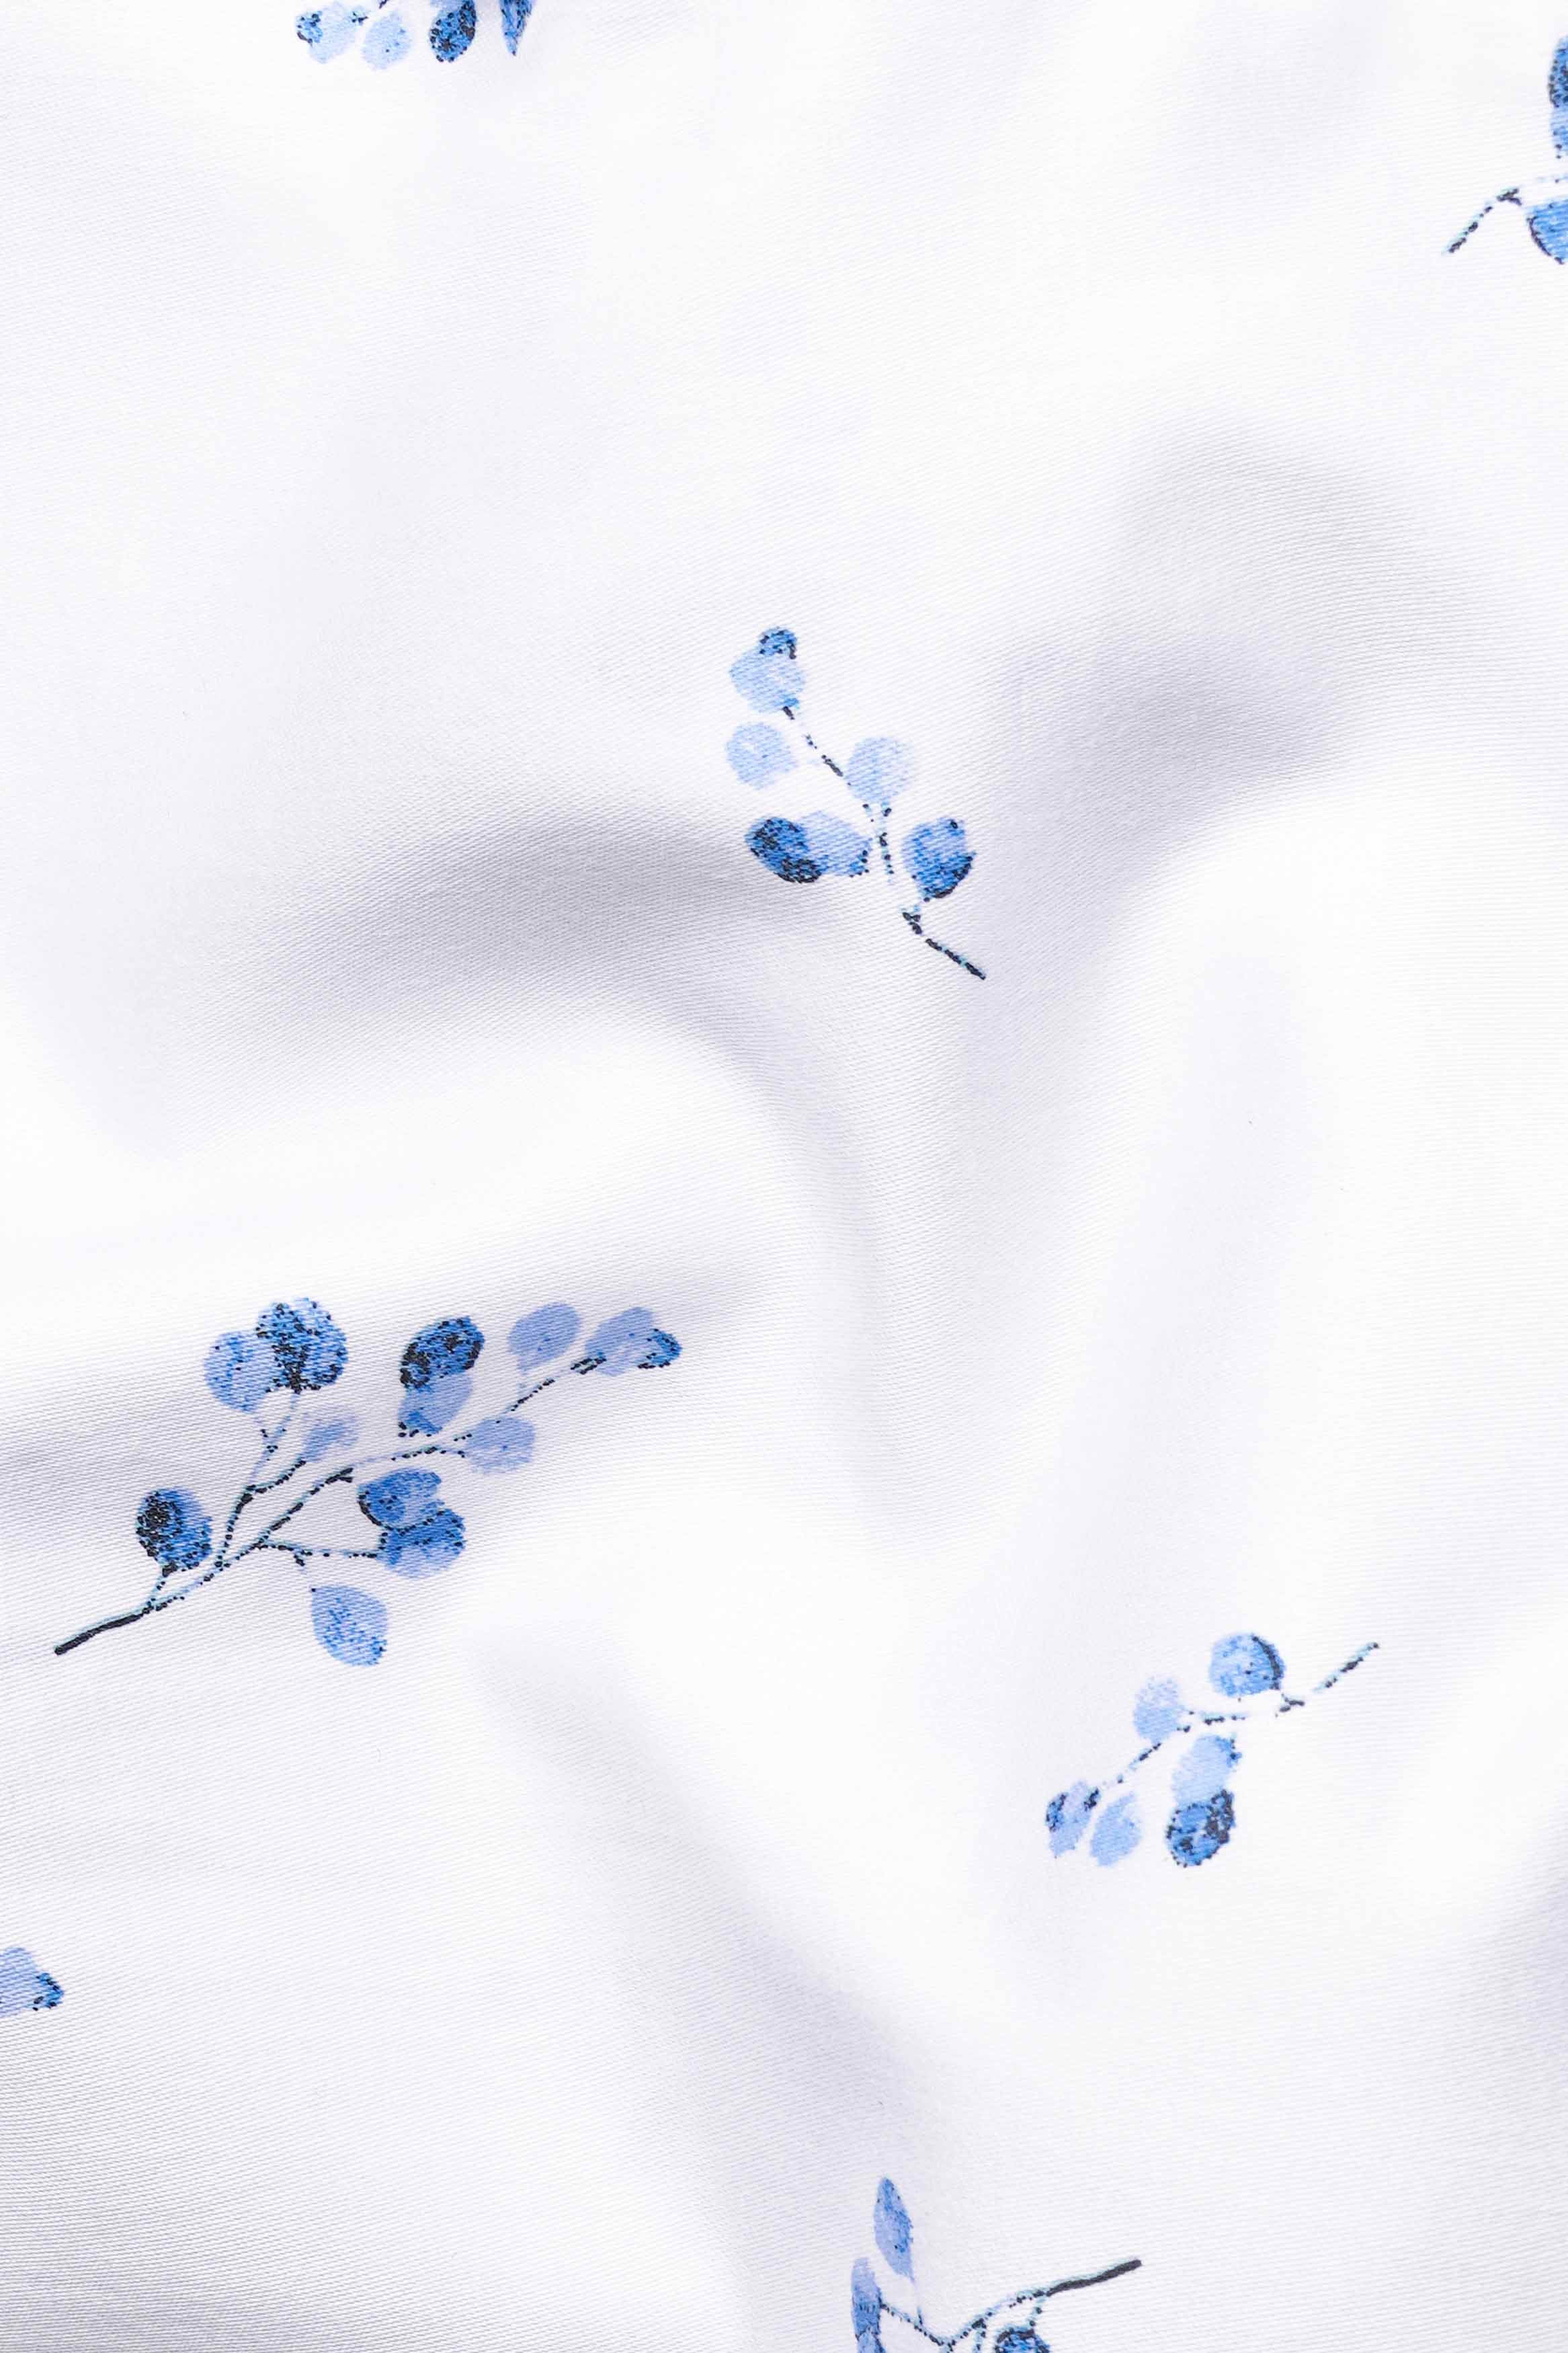 Bright White and Casper Blue Ditsy Printed Hand Painted Super Soft Premium Cotton Designer Shirt 6403-BLE-ART-38, 6403-BLE-ART-H-38, 6403-BLE-ART-39, 6403-BLE-ART-H-39, 6403-BLE-ART-40, 6403-BLE-ART-H-40, 6403-BLE-ART-42, 6403-BLE-ART-H-42, 6403-BLE-ART-44, 6403-BLE-ART-H-44, 6403-BLE-ART-46, 6403-BLE-ART-H-46, 6403-BLE-ART-48, 6403-BLE-ART-H-48, 6403-BLE-ART-50, 6403-BLE-ART-H-50, 6403-BLE-ART-52, 6403-BLE-ART-H-52